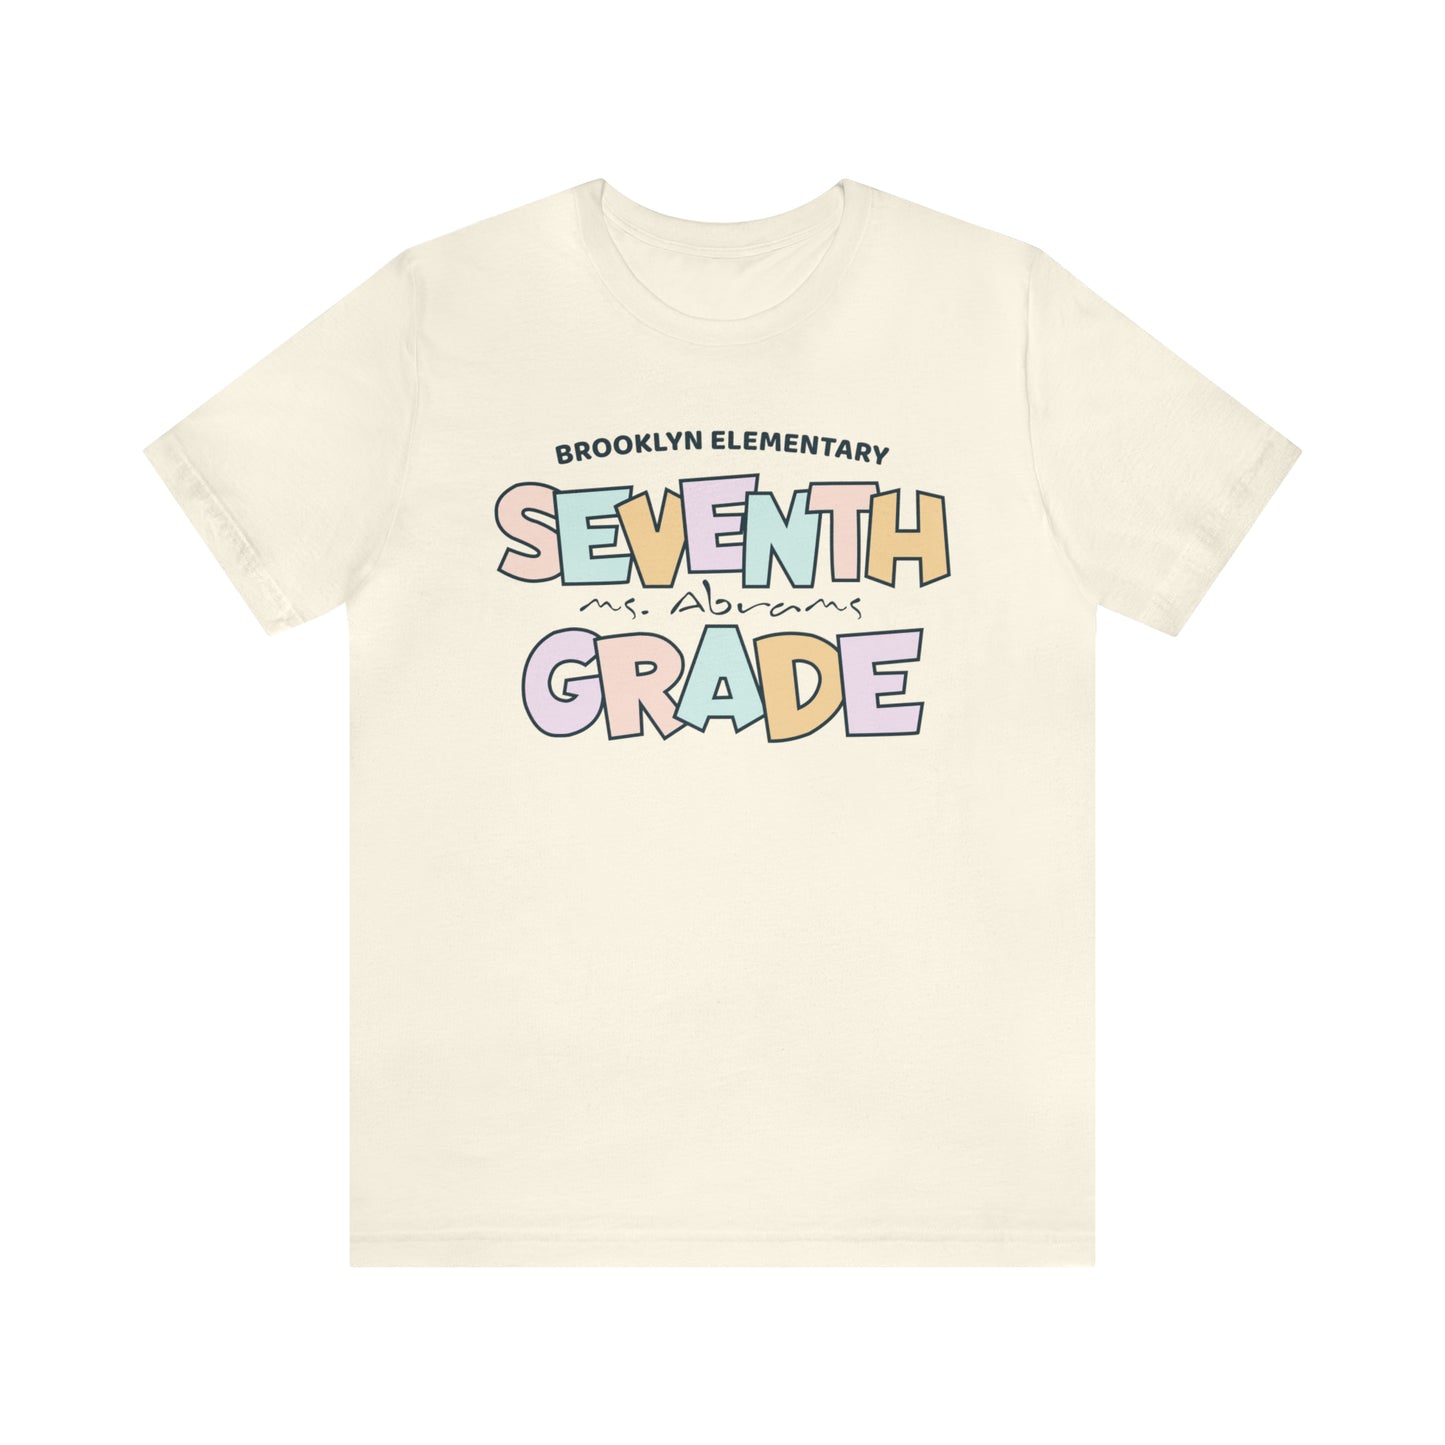 Seventh Grade Shirt, Personalized School and Teacher Name Shirt